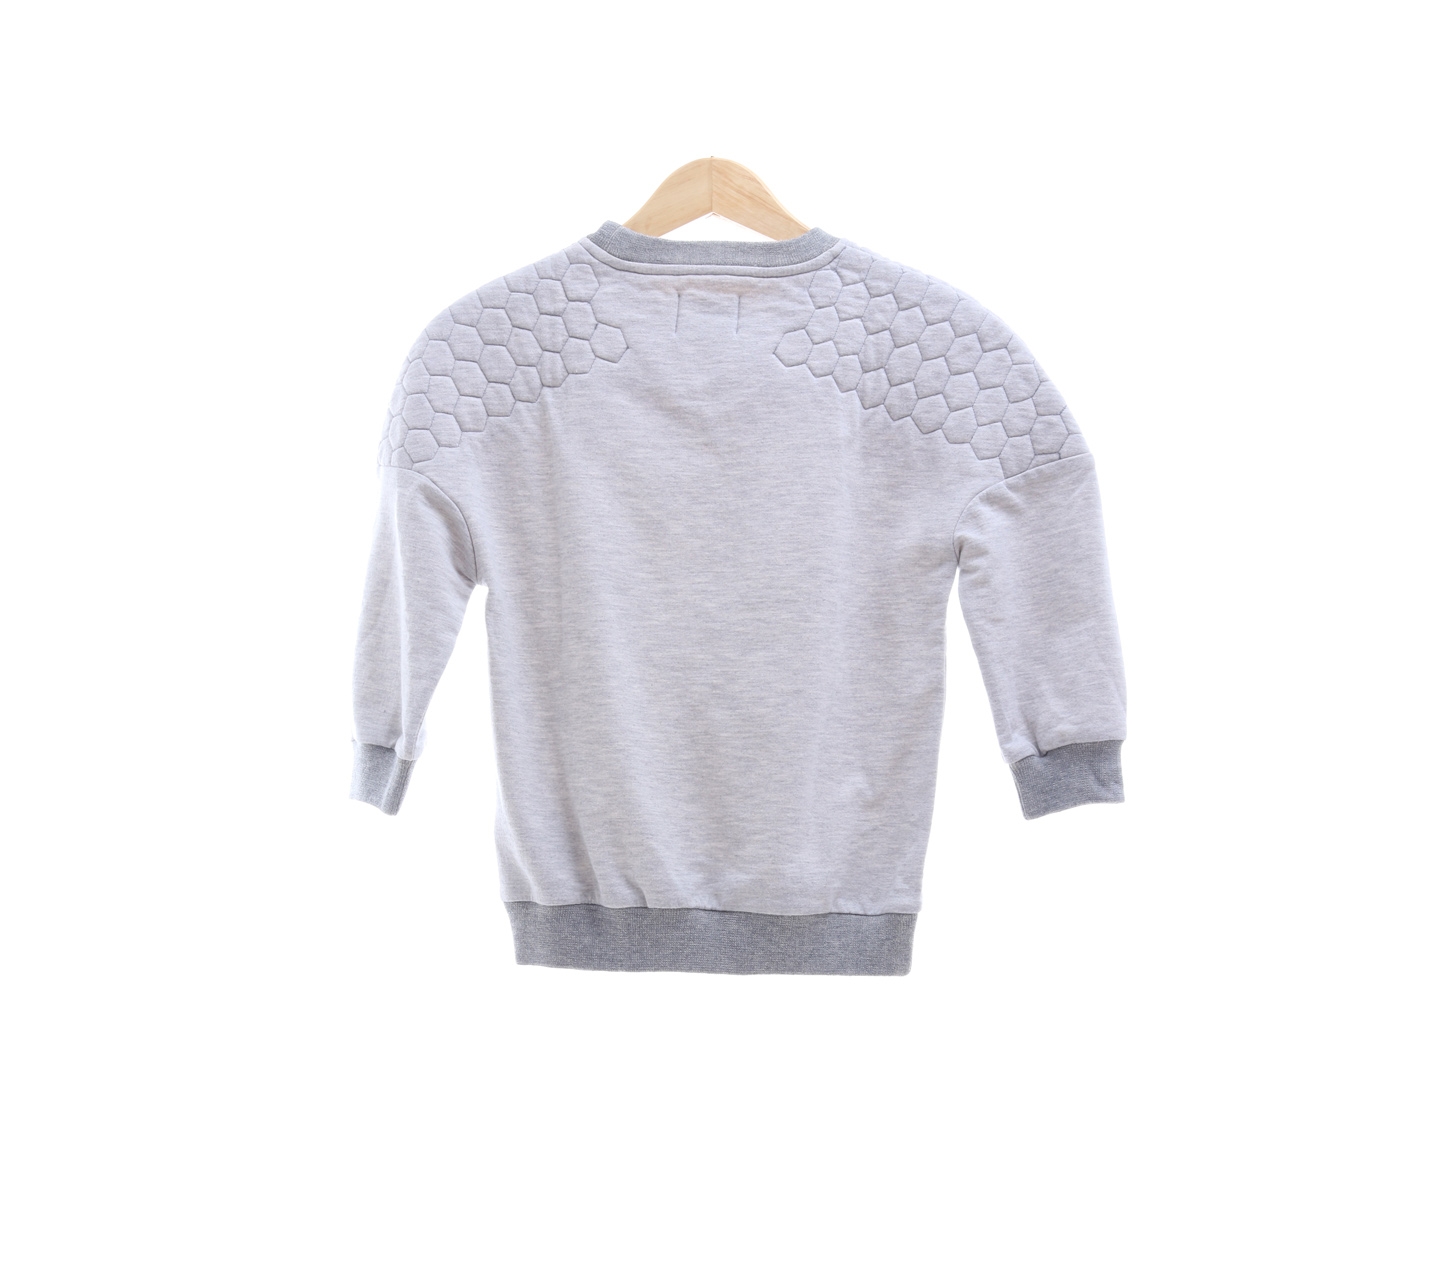 Alexalexa Grey Sweater